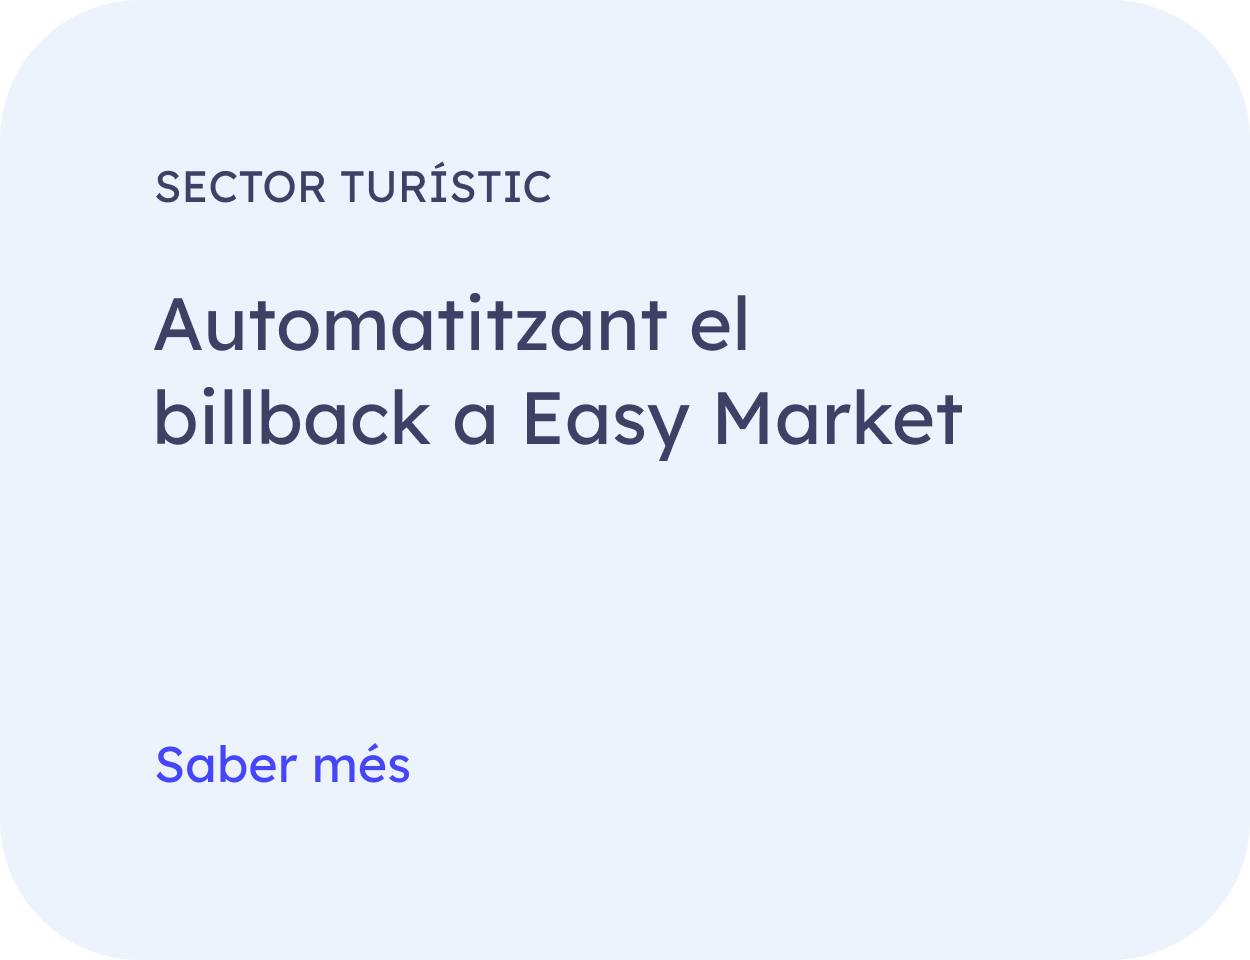 Automatitzant el billback a Easy Market